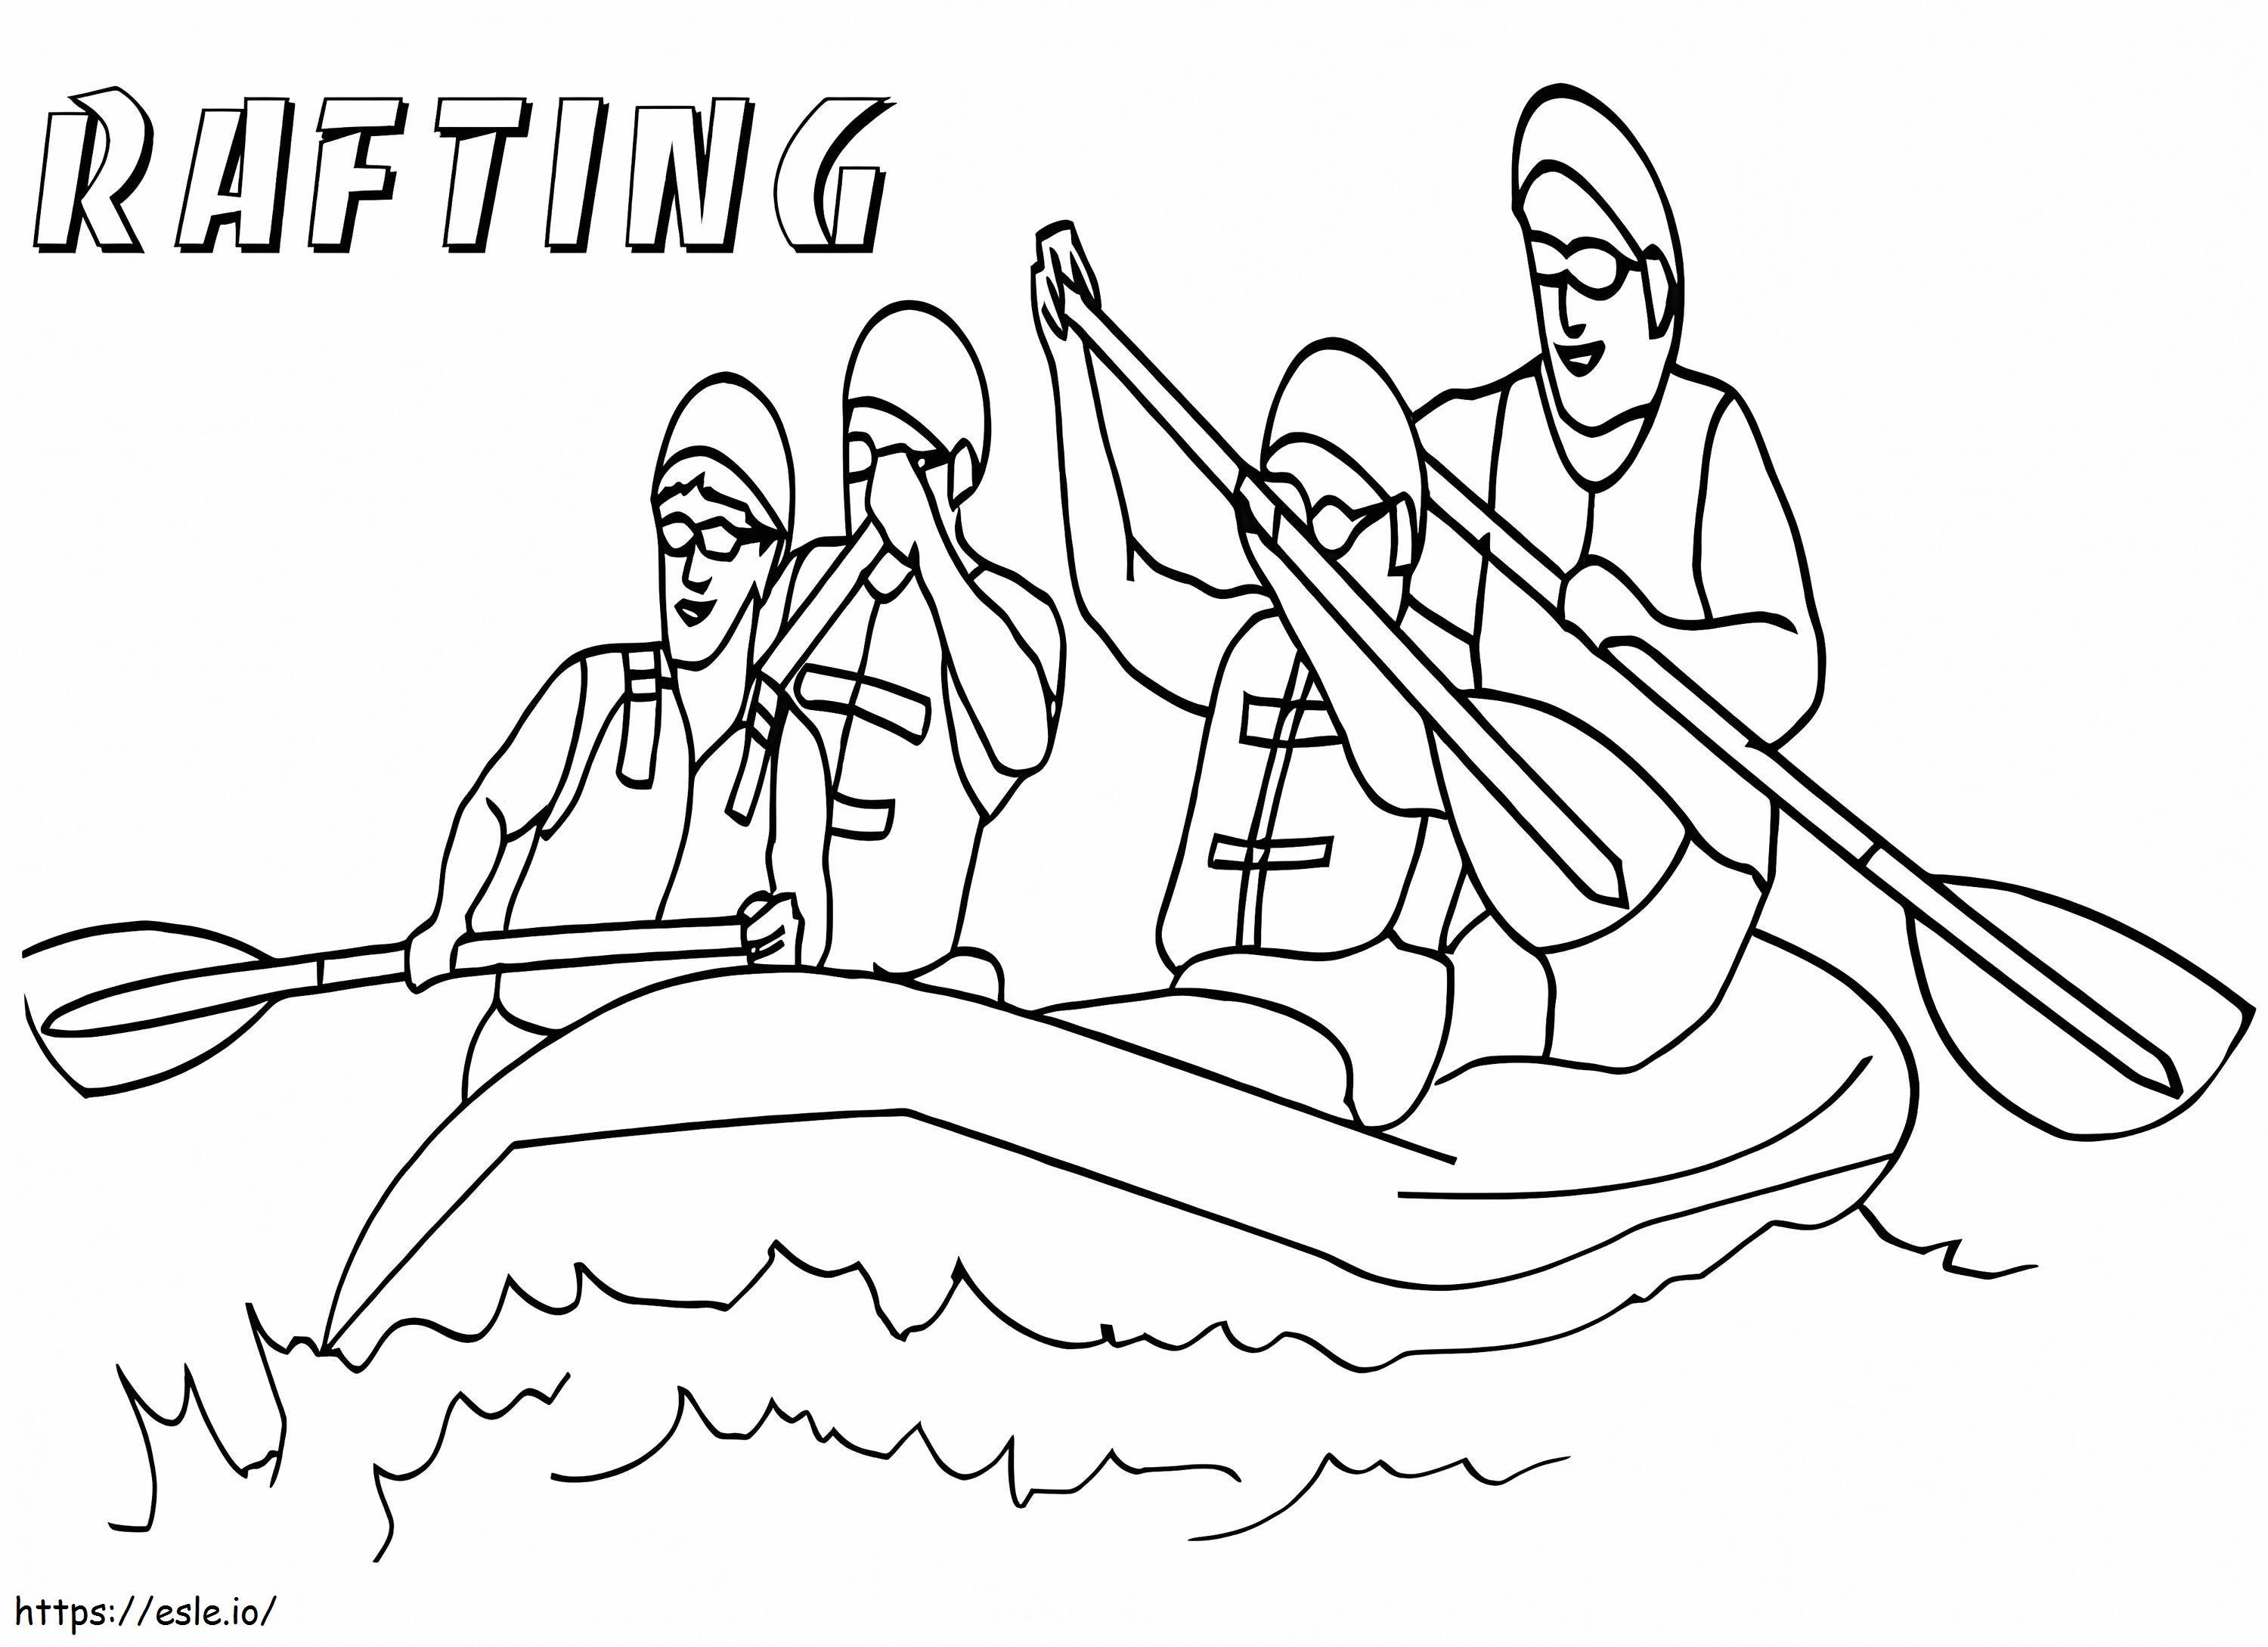 Rafting ausmalbilder